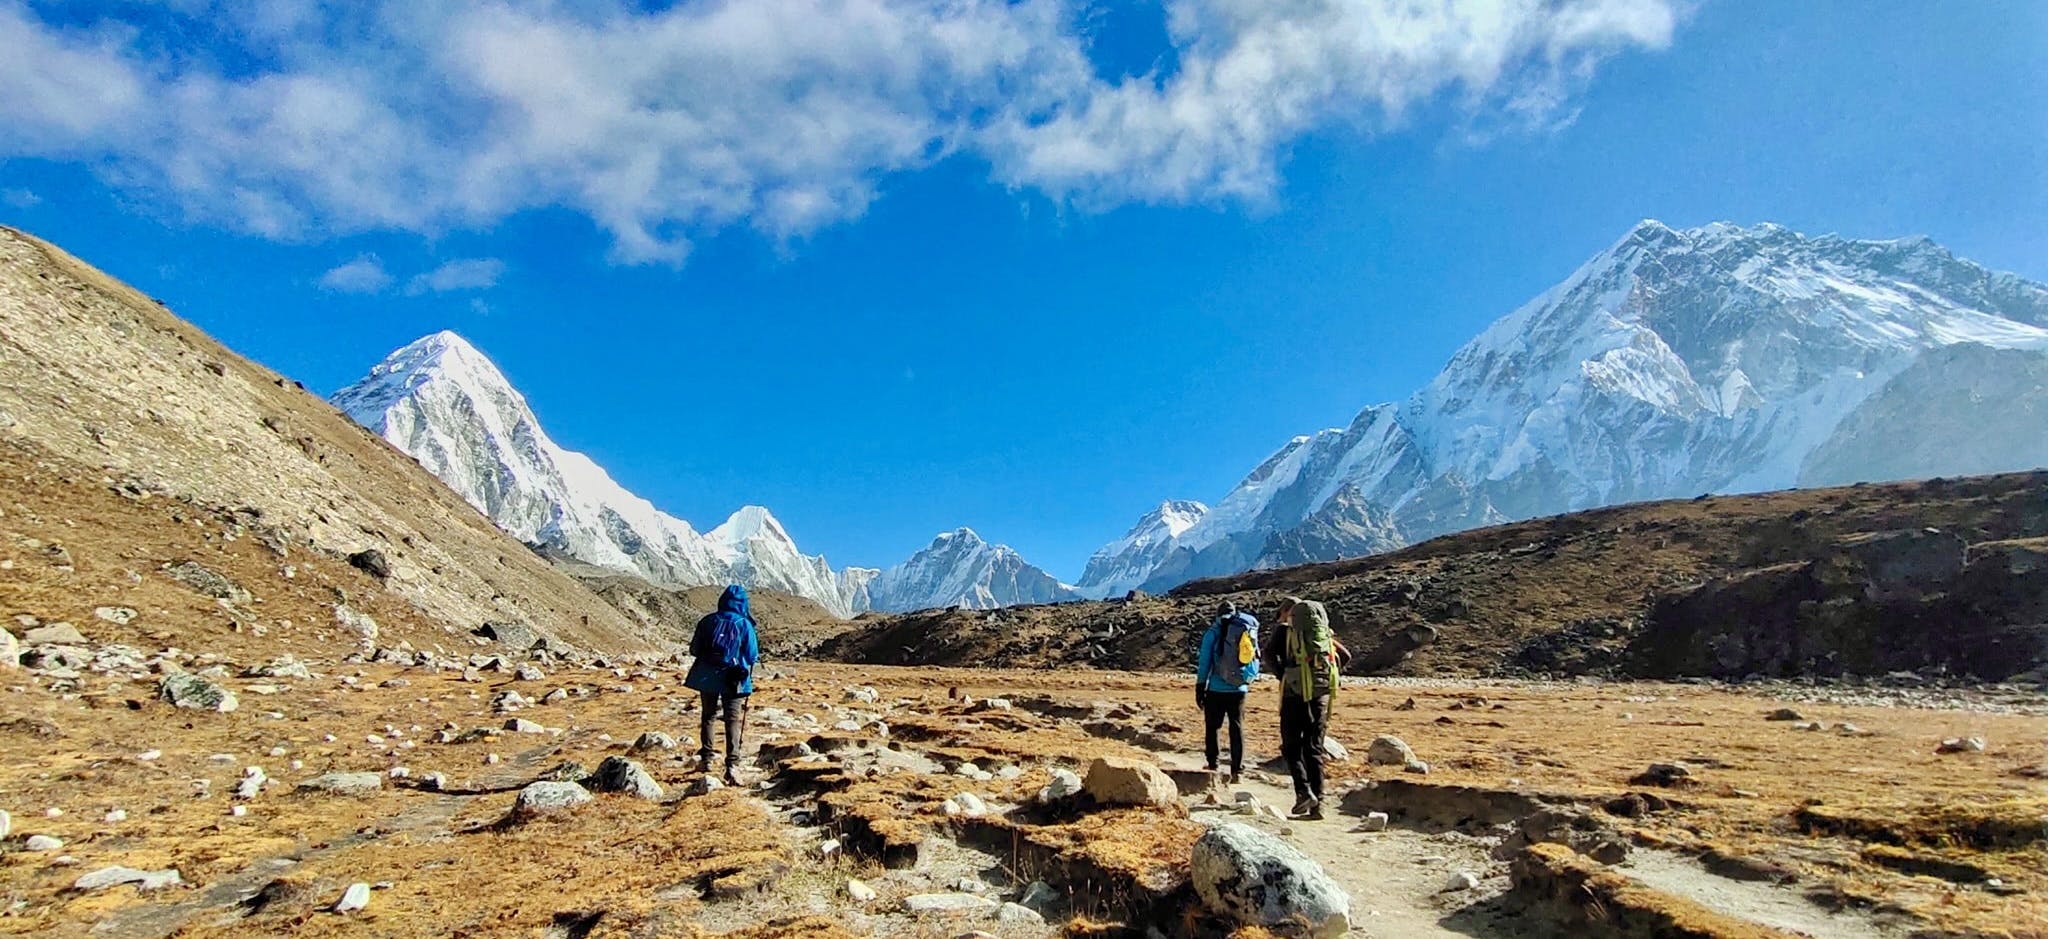 Trekking Nepal in Autumn - Best season to trek in Nepal